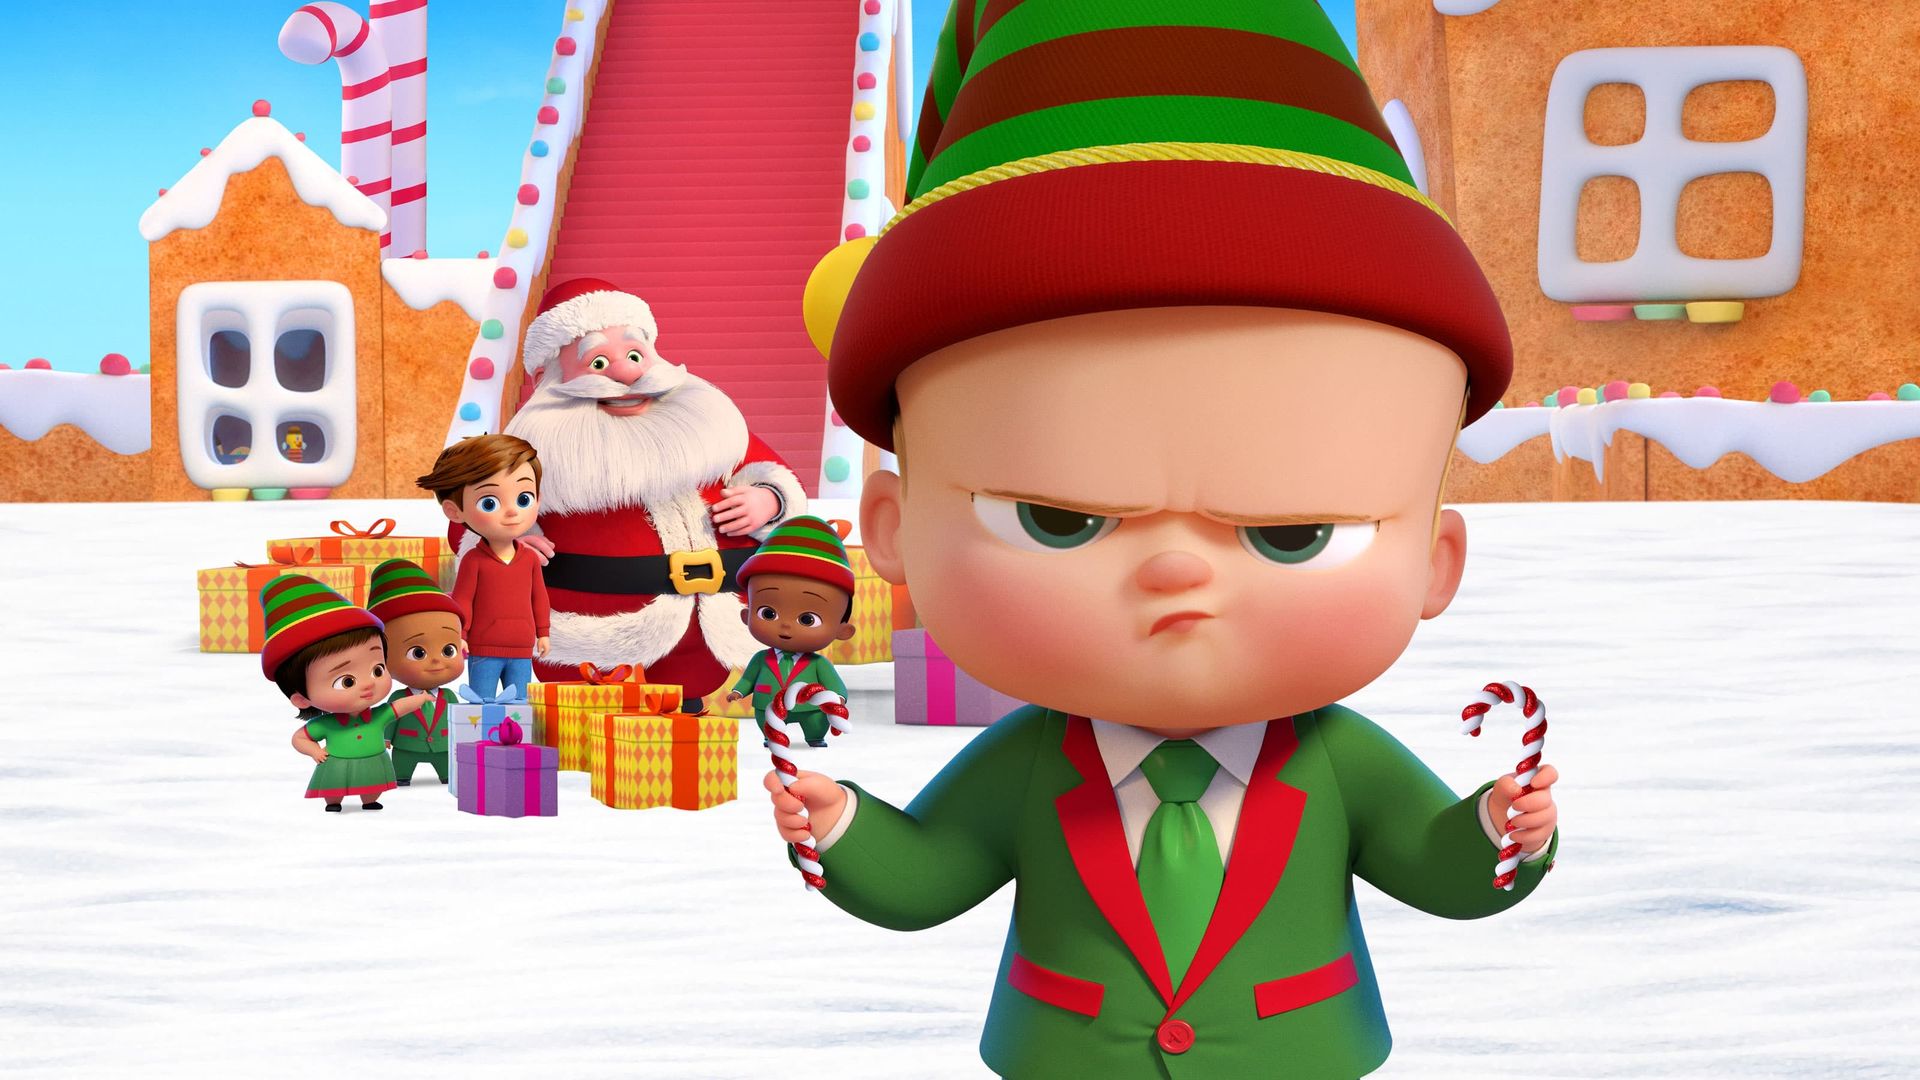 The Boss Baby: Christmas Bonus background